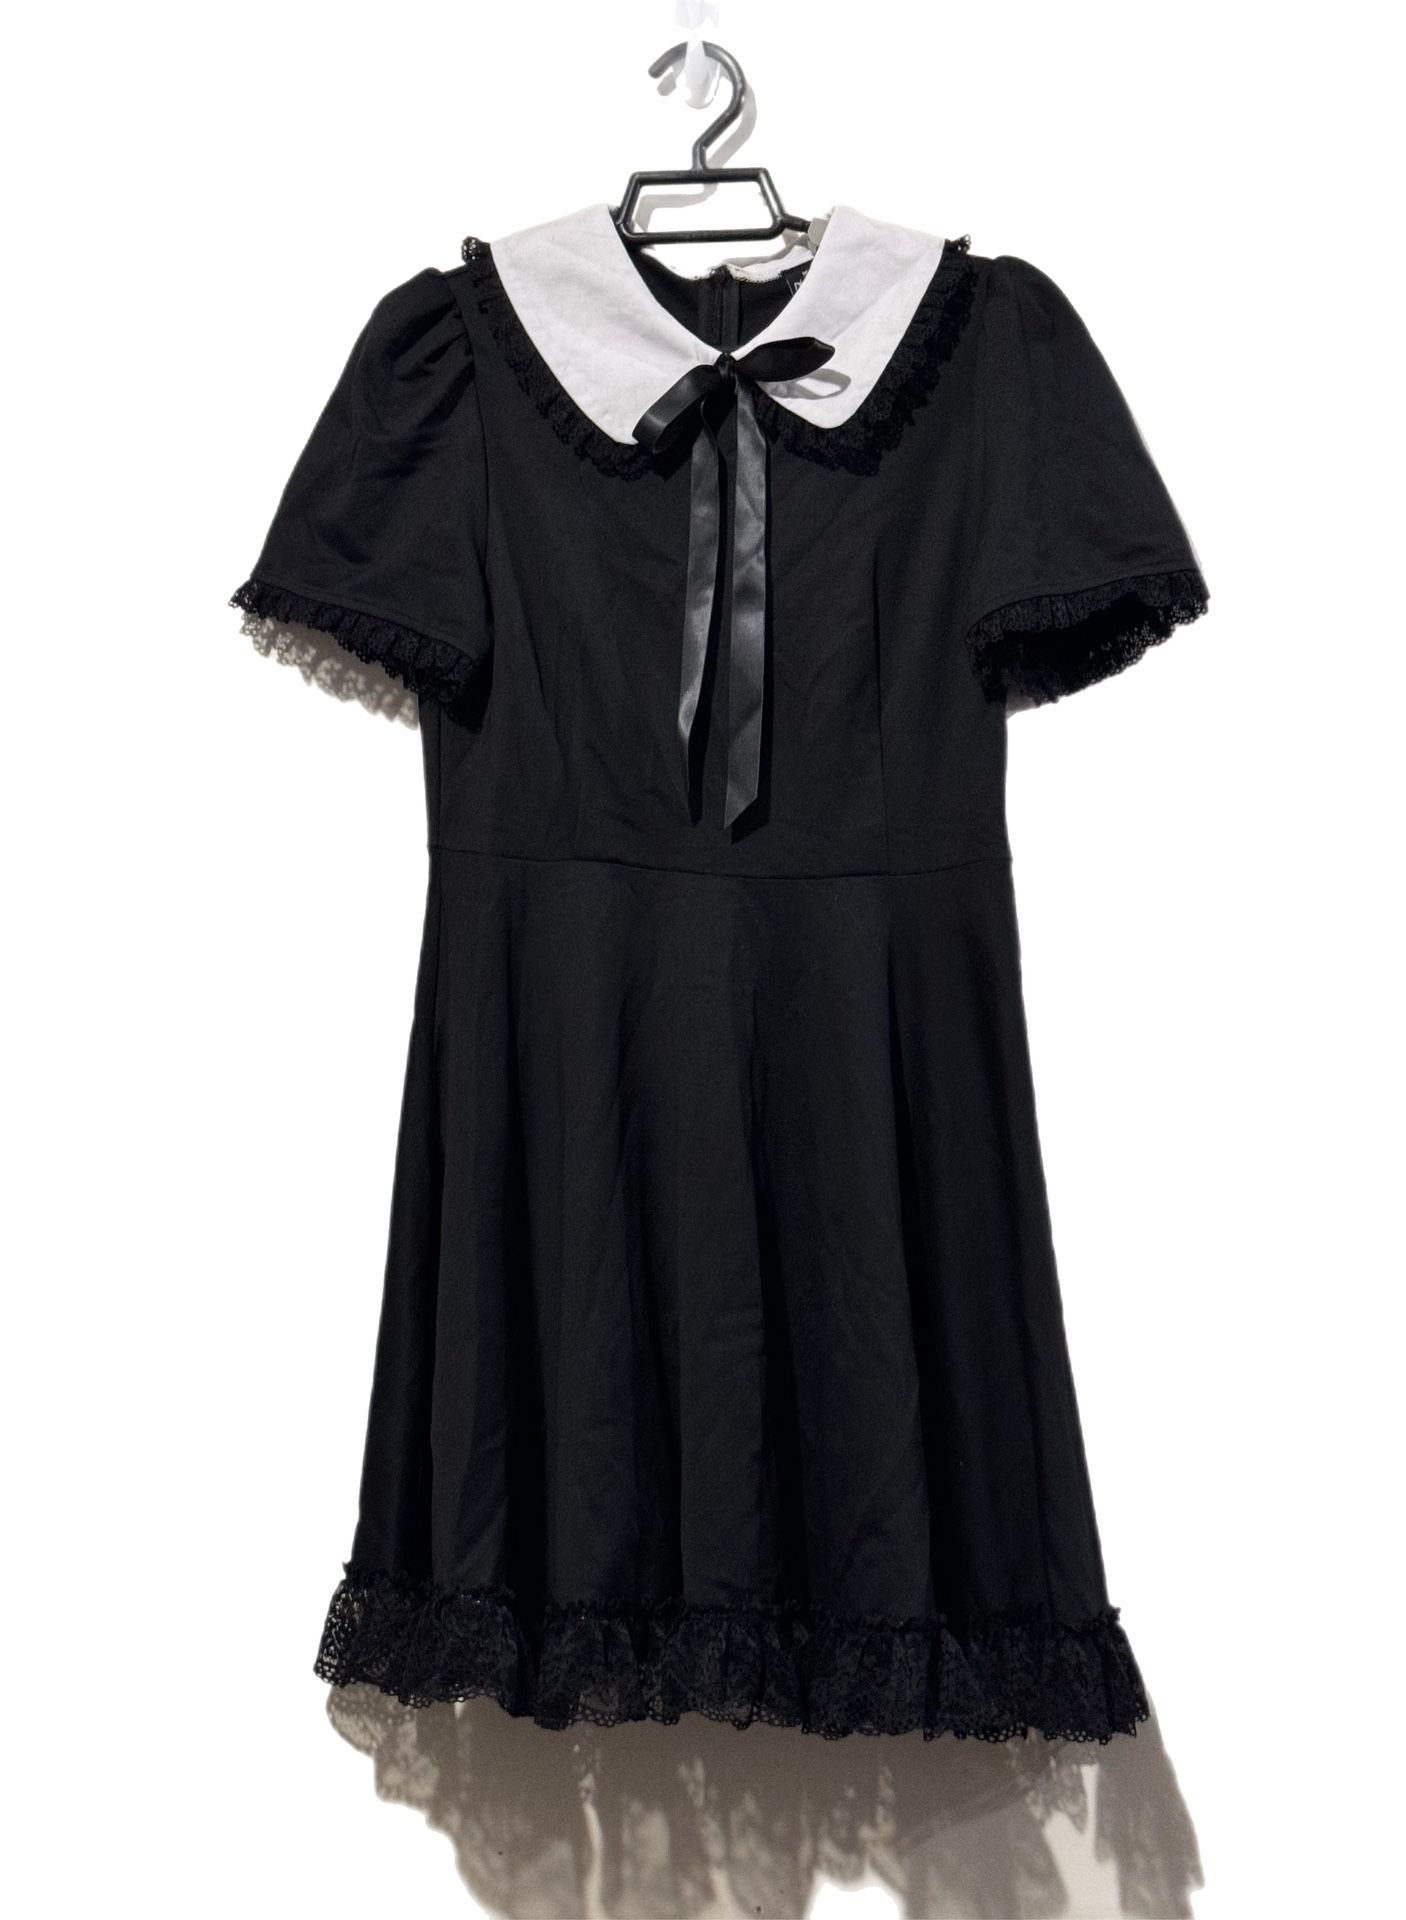 The Grave Girls Soul’s Embrace Mini Babydoll Dress Sz S Black White Stretchy NWT